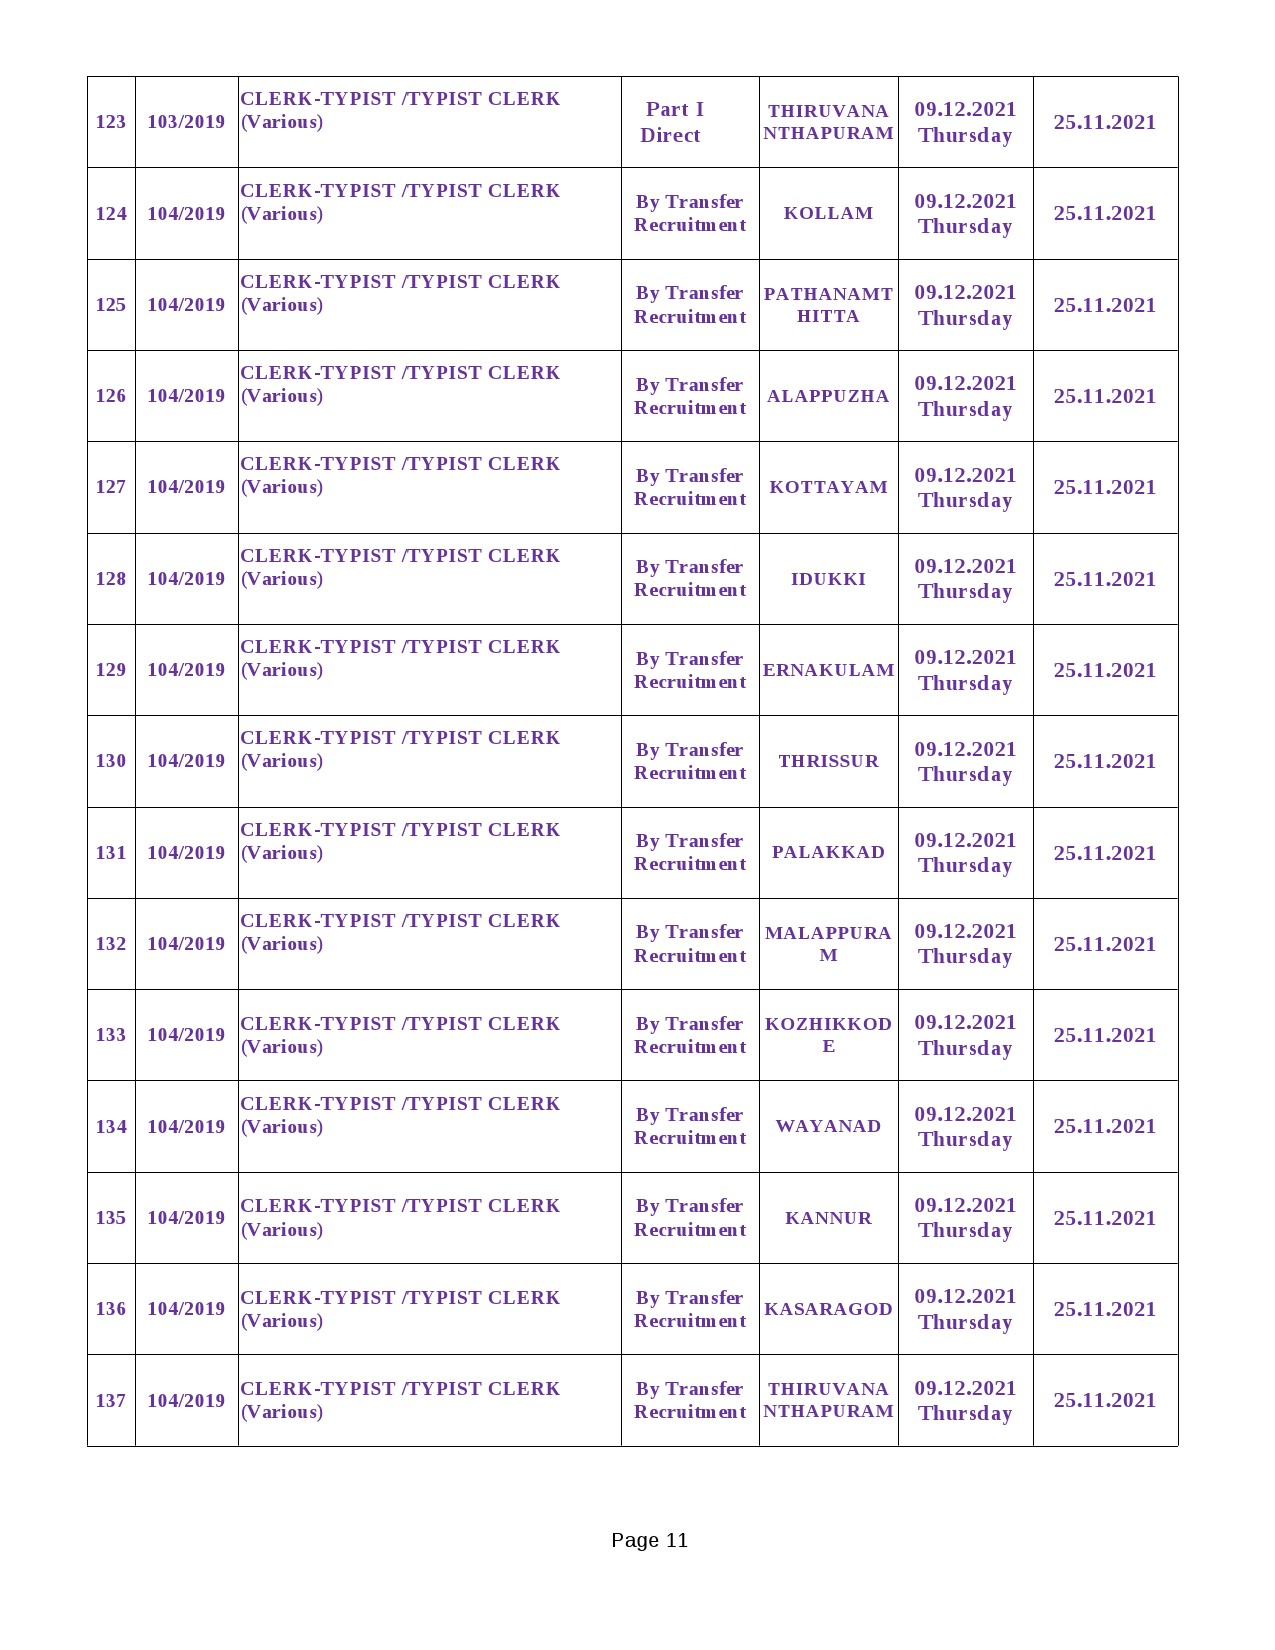 KPSC Programme For Main Examinations Of Upto SSLC Level Posts - Notification Image 11